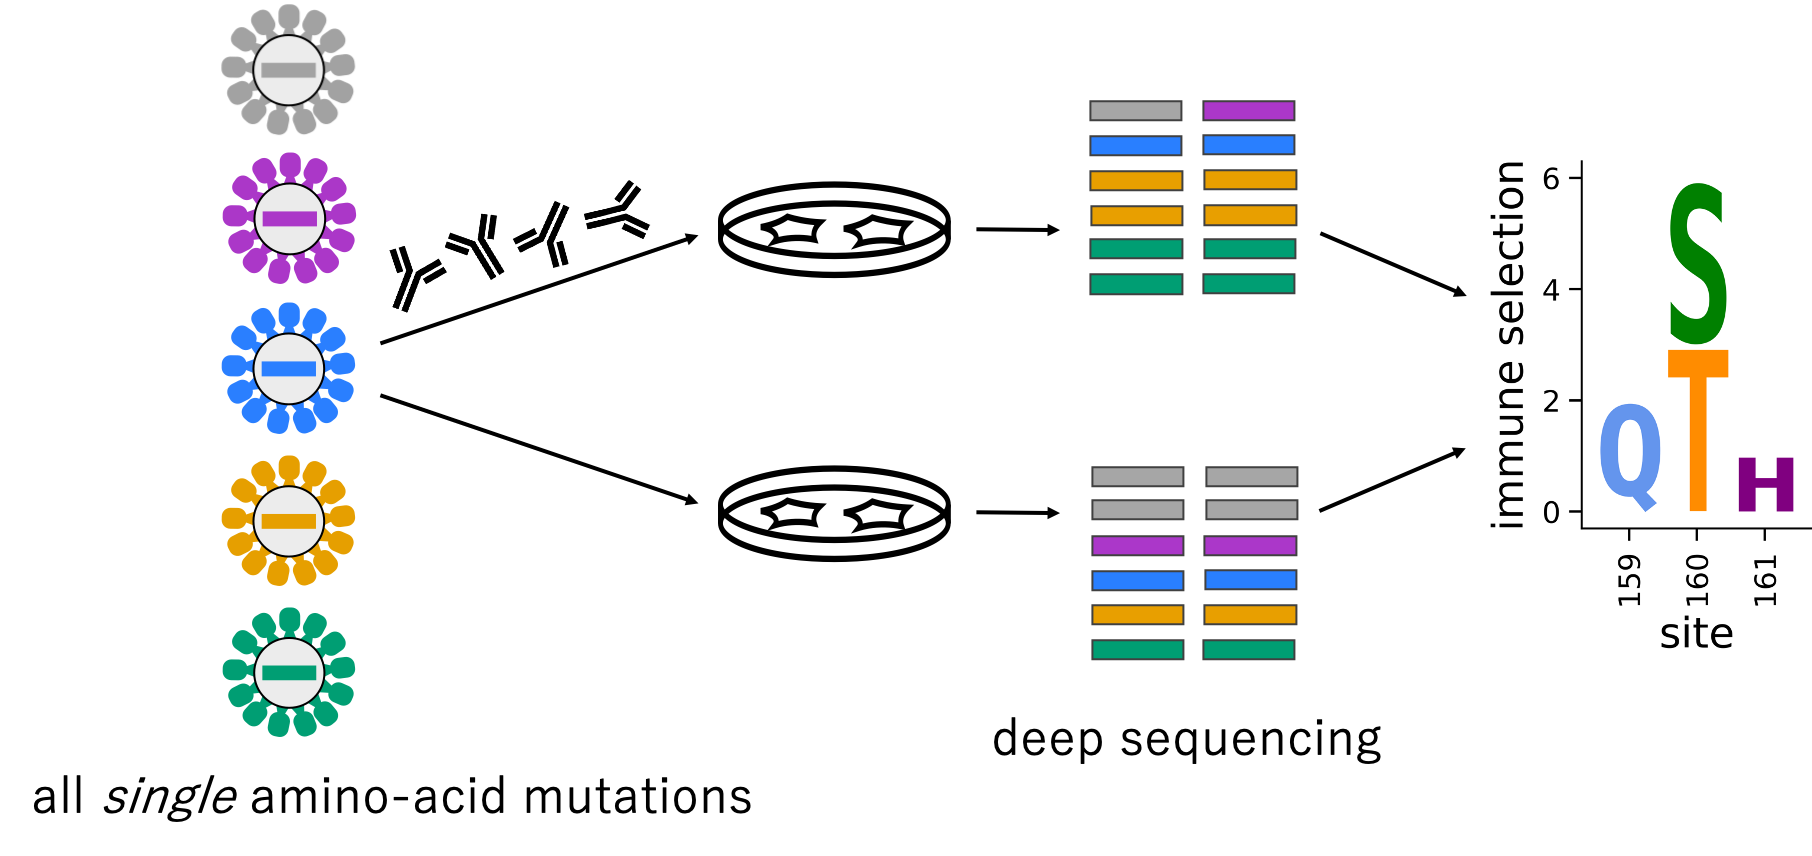 mutational antigenic profiling schematic